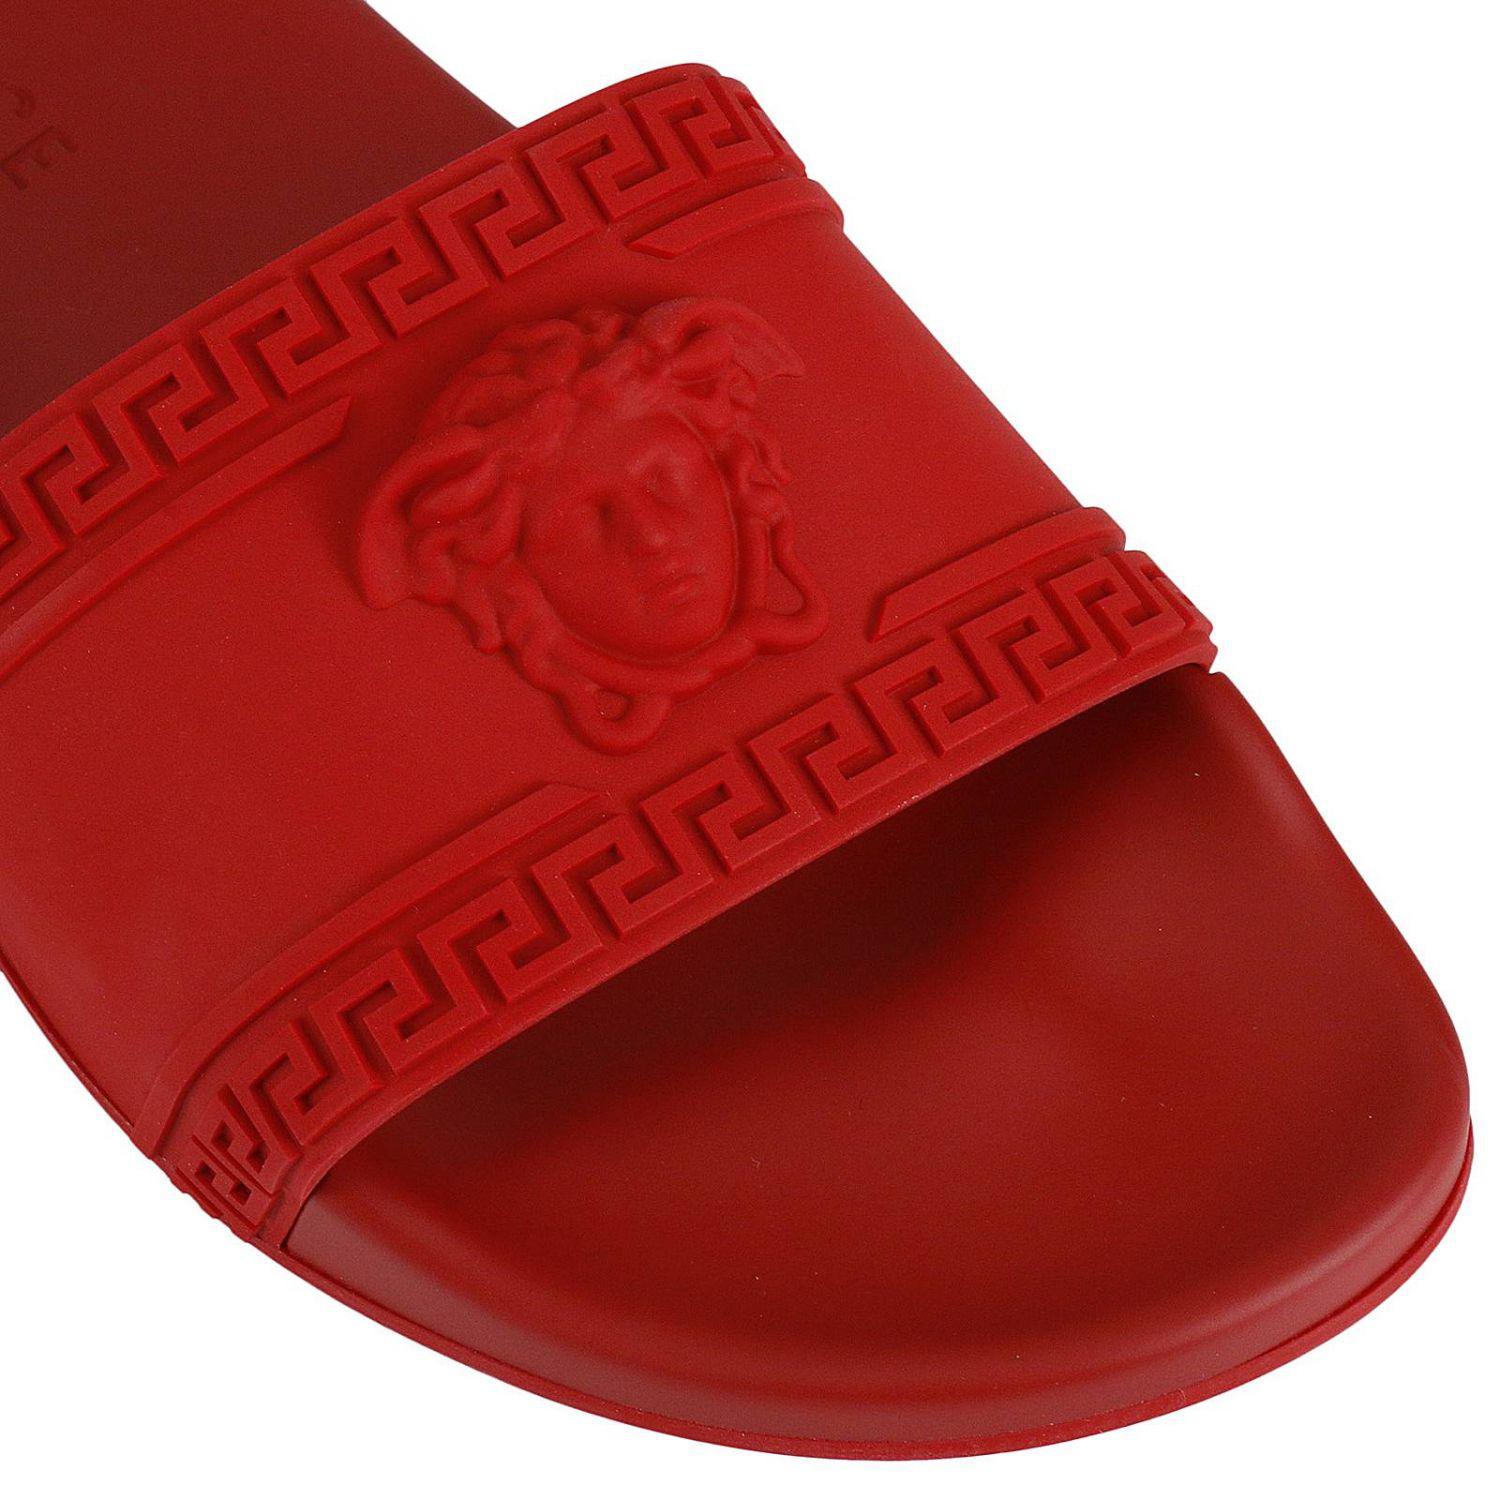 Lyst - Versace Sandals Shoes Men in Red for Men